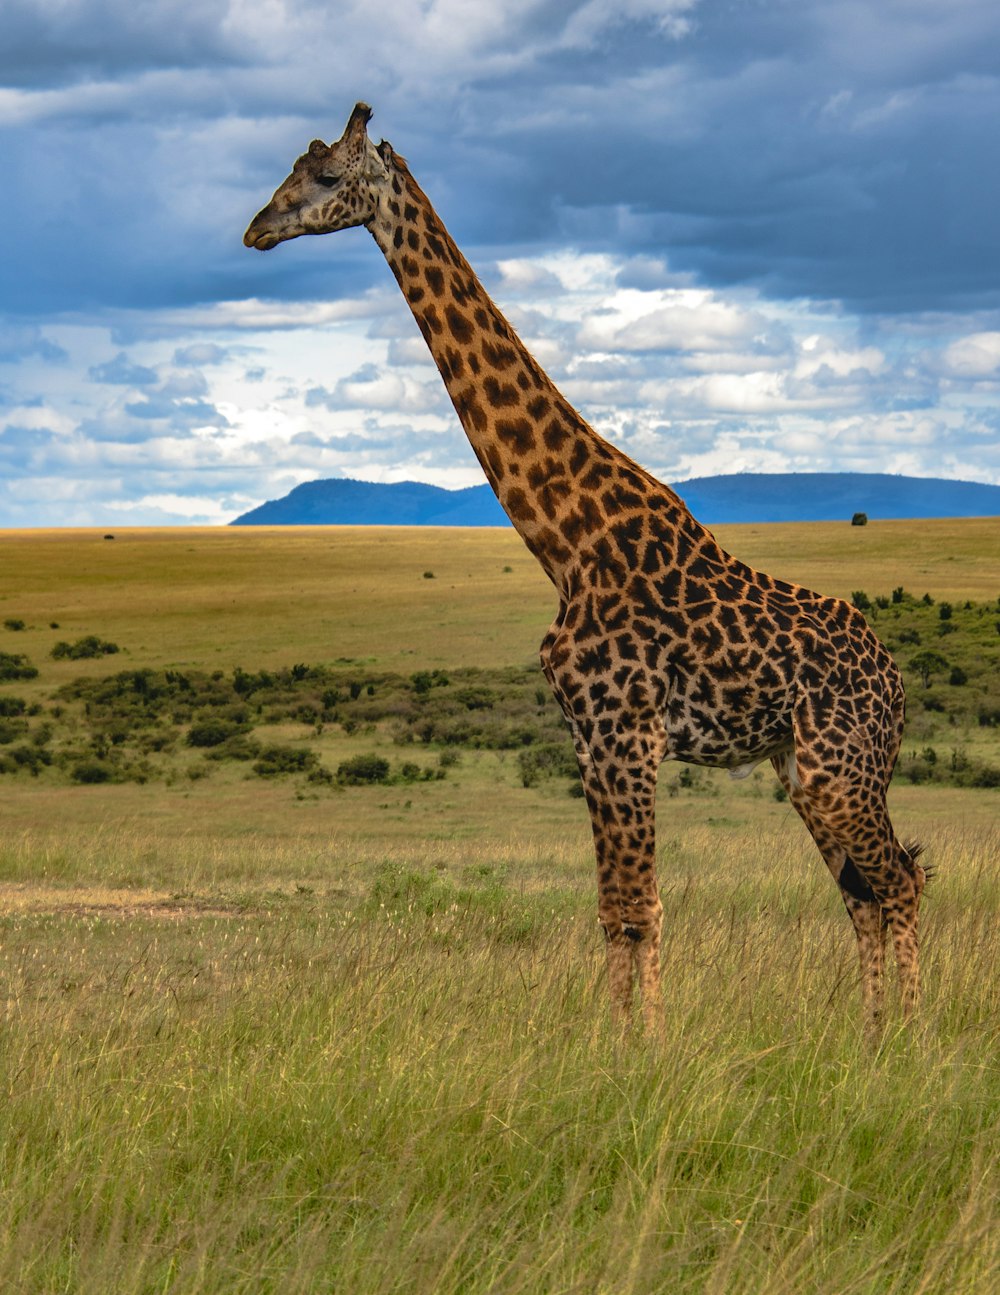 a giraffe standing in a grassy field under a cloudy sky